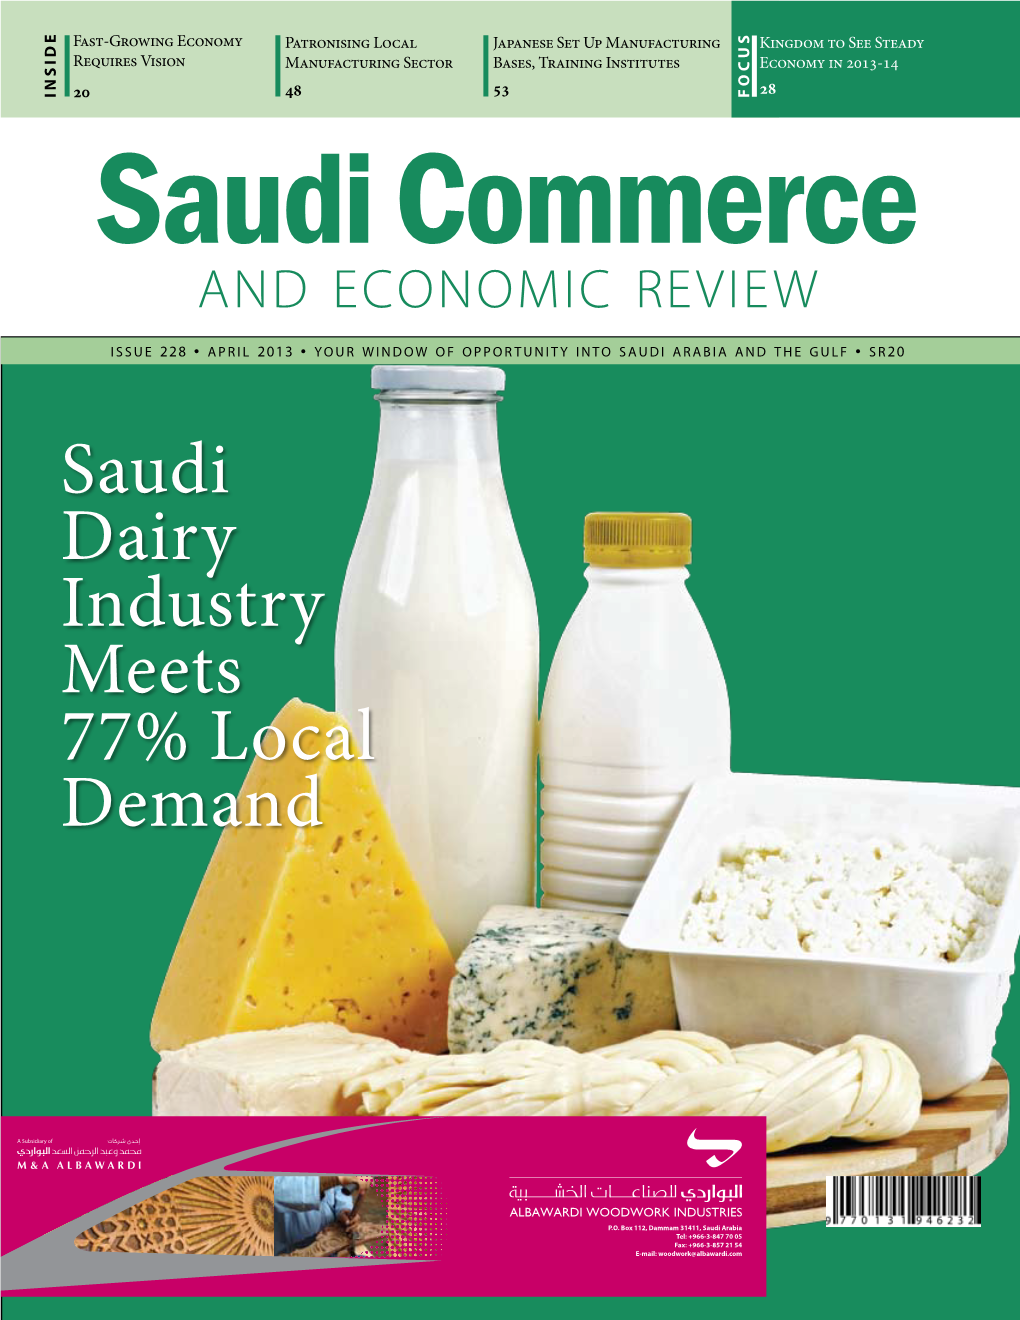 Saudi Dairy Industry Meets 77% Local Demand